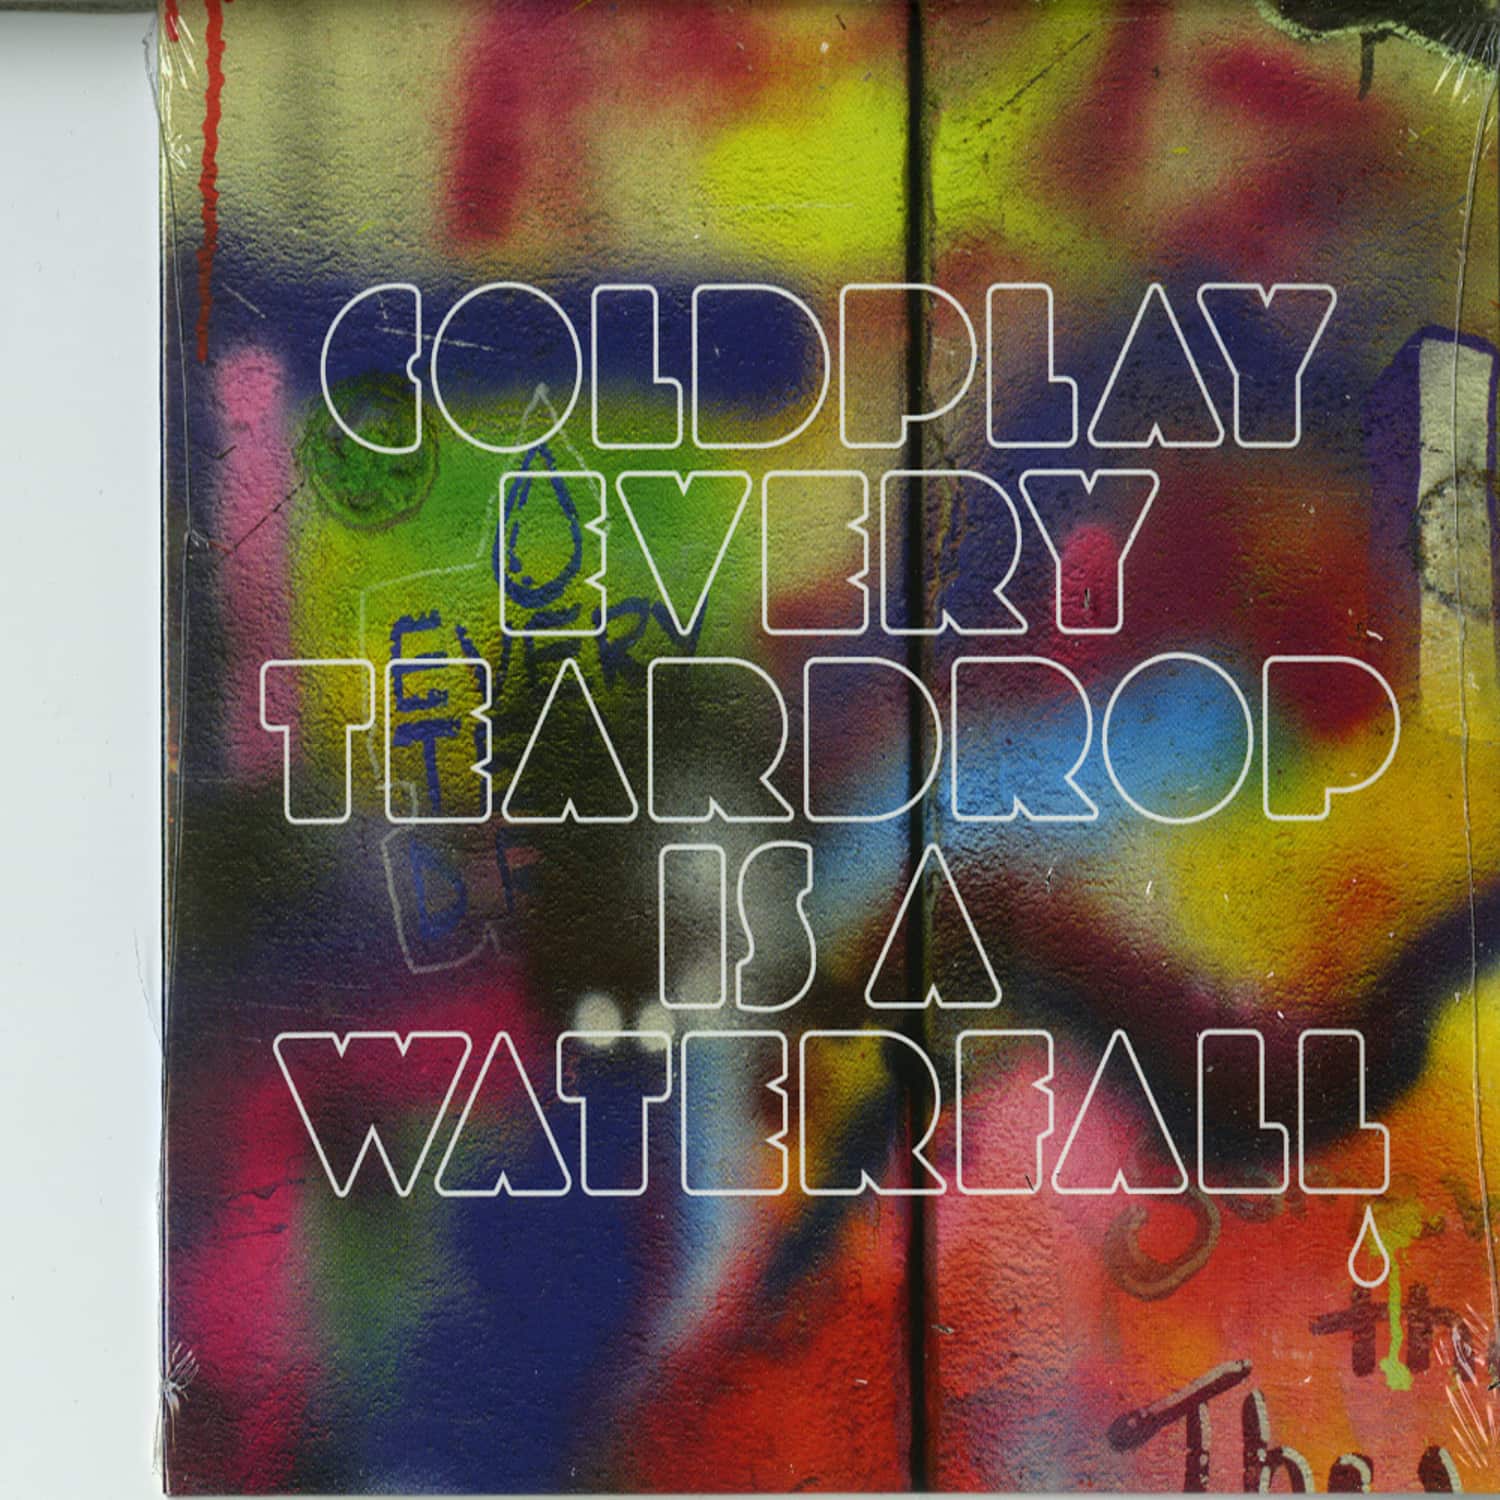 Coldplay - EVERY TEARDROP IS A WATERFALL 